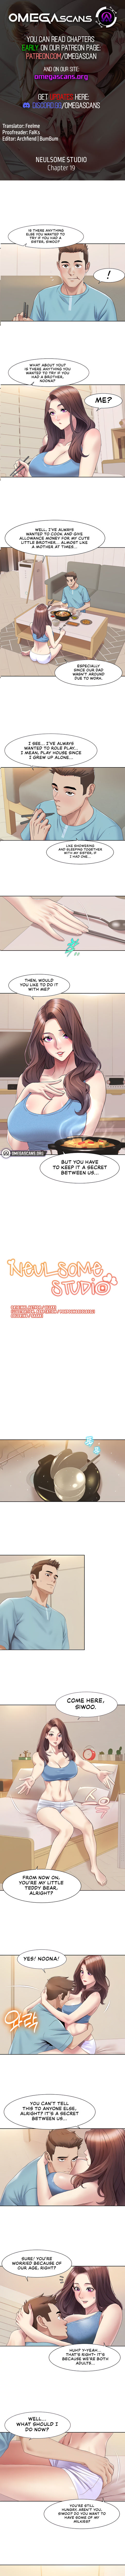 Neulsome Studio NEW image